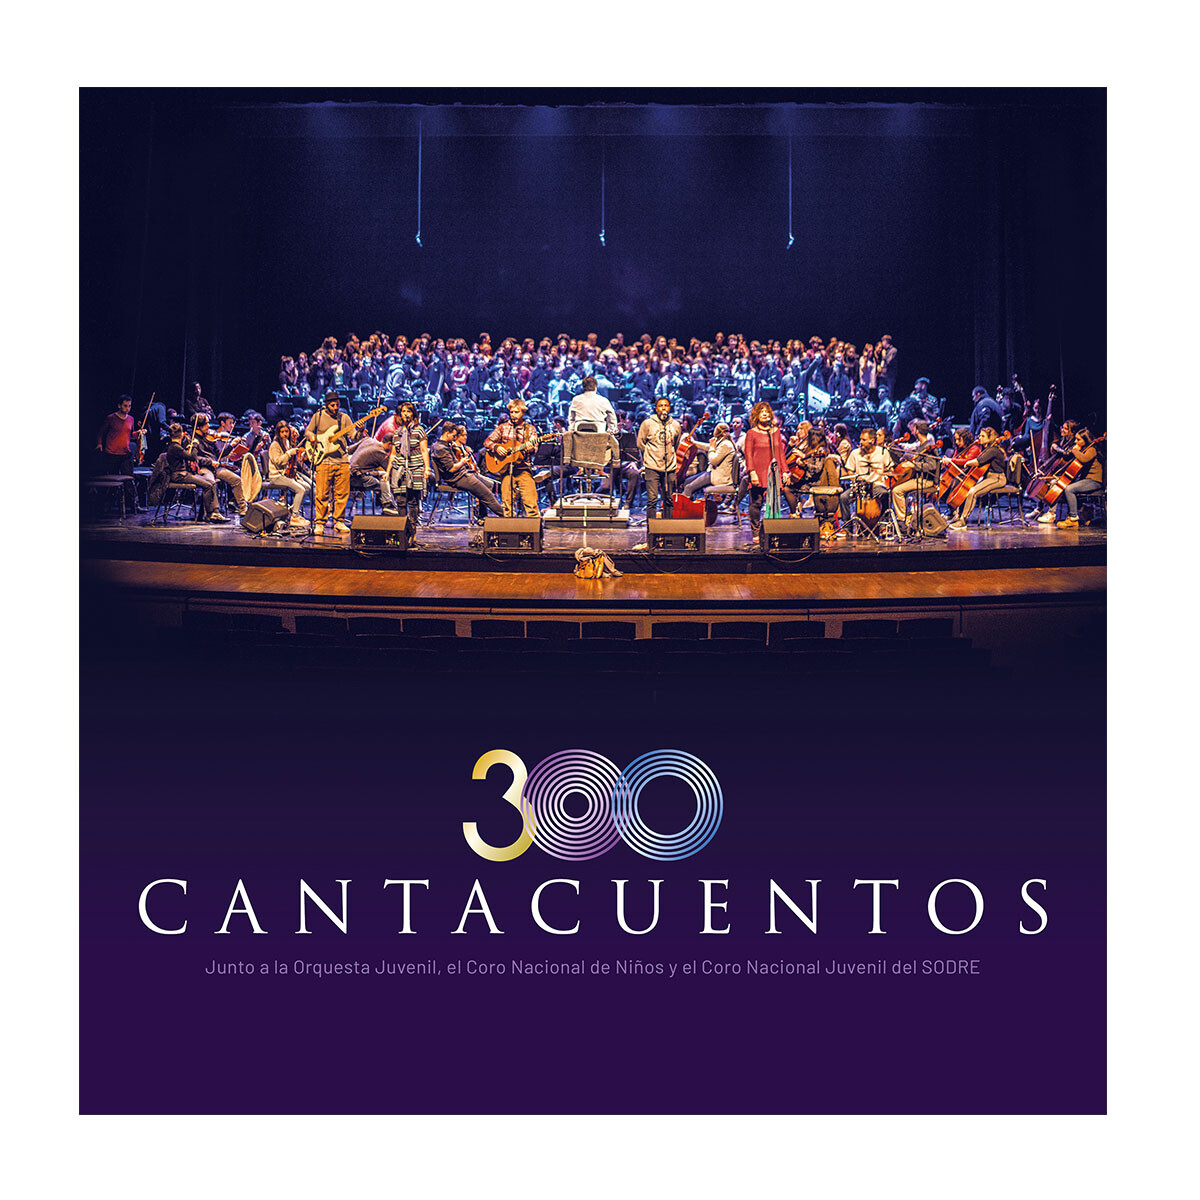 Cantacuentos - 300 Cd 